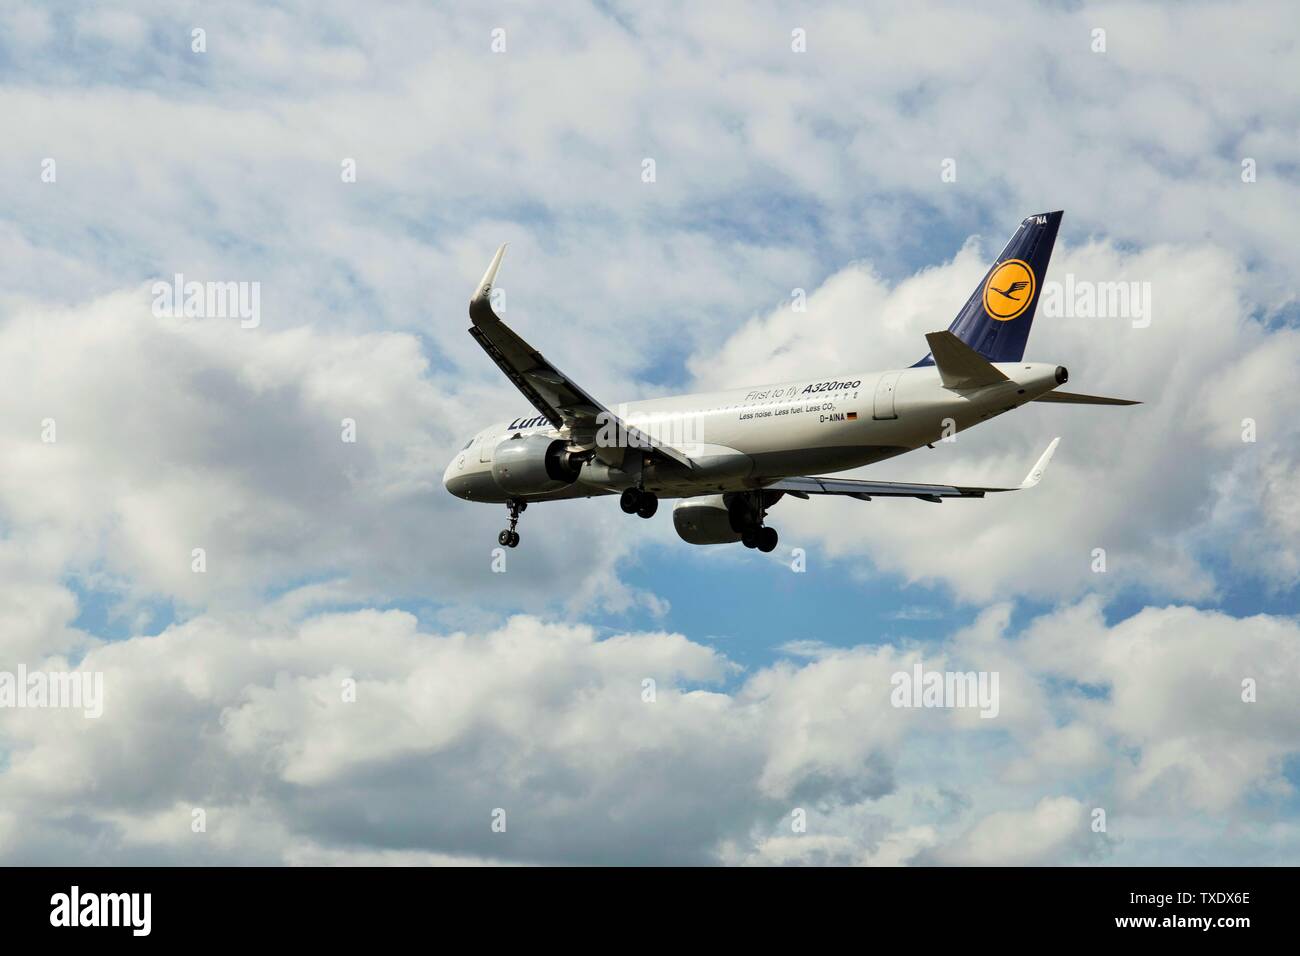 Deutsche Lufthansa AG, Lufthansa, flag carrier of Germany, aeroplane landing at Heathrow Airport, Heathrow Airport, London Airport, London Heathrow, London, UK Stock Photo